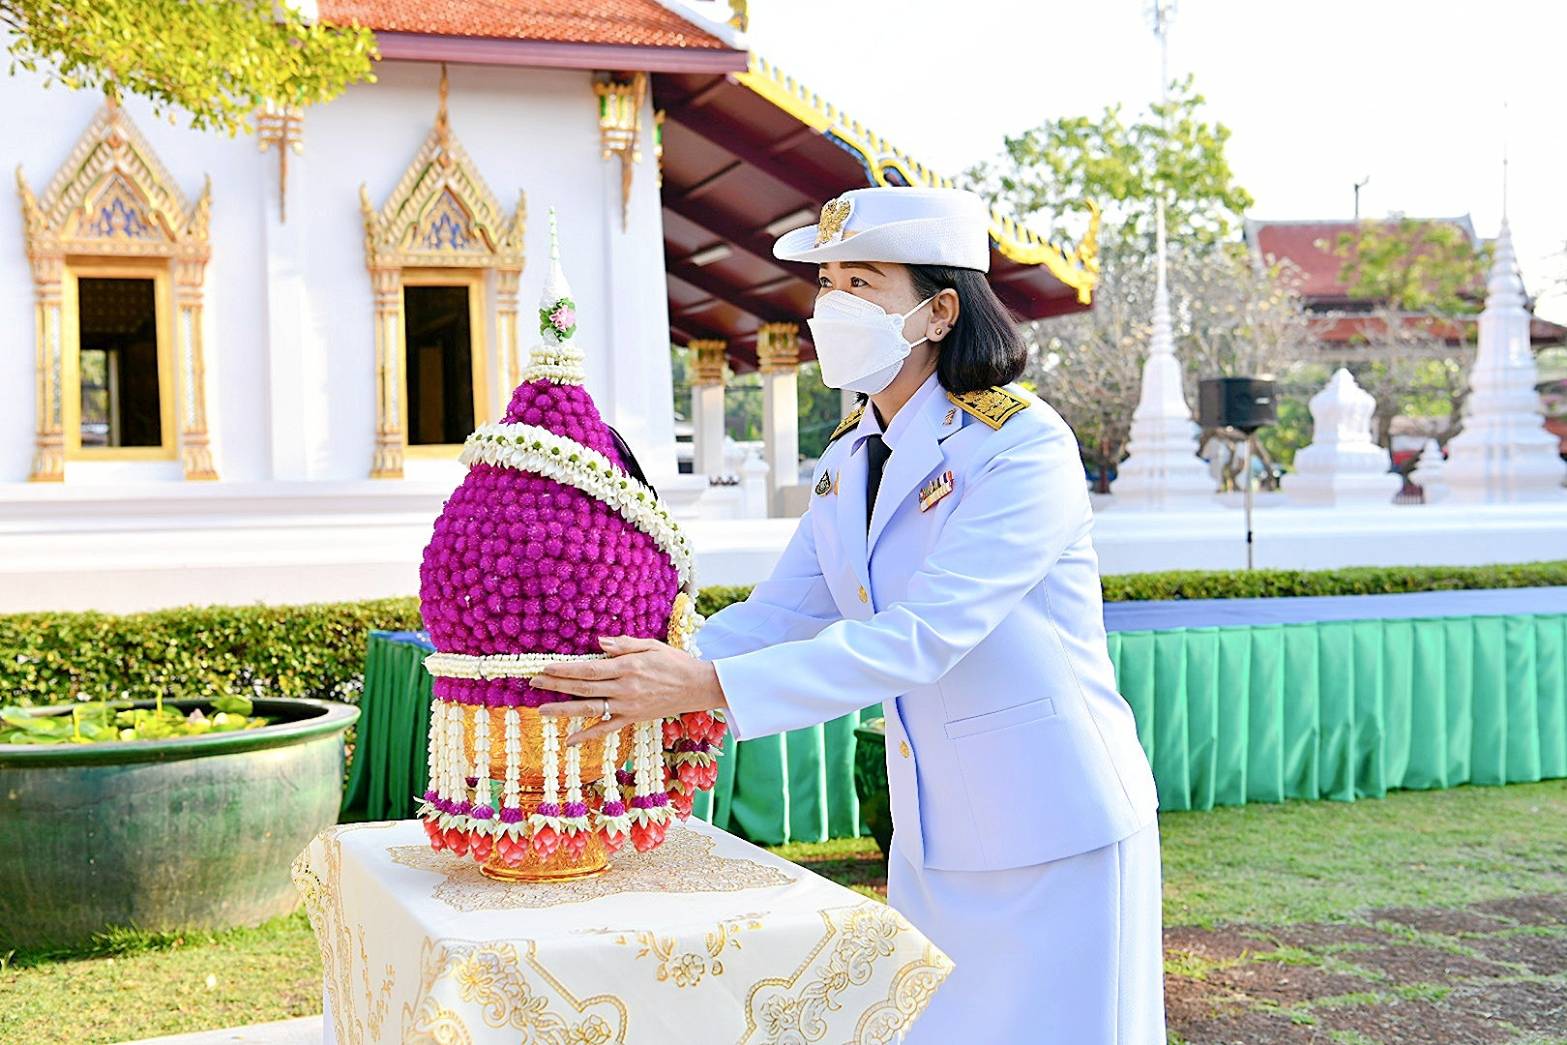 24 February 2022, at King Rama II Memorial Park, Amphawa District, Samut Songkhram Province